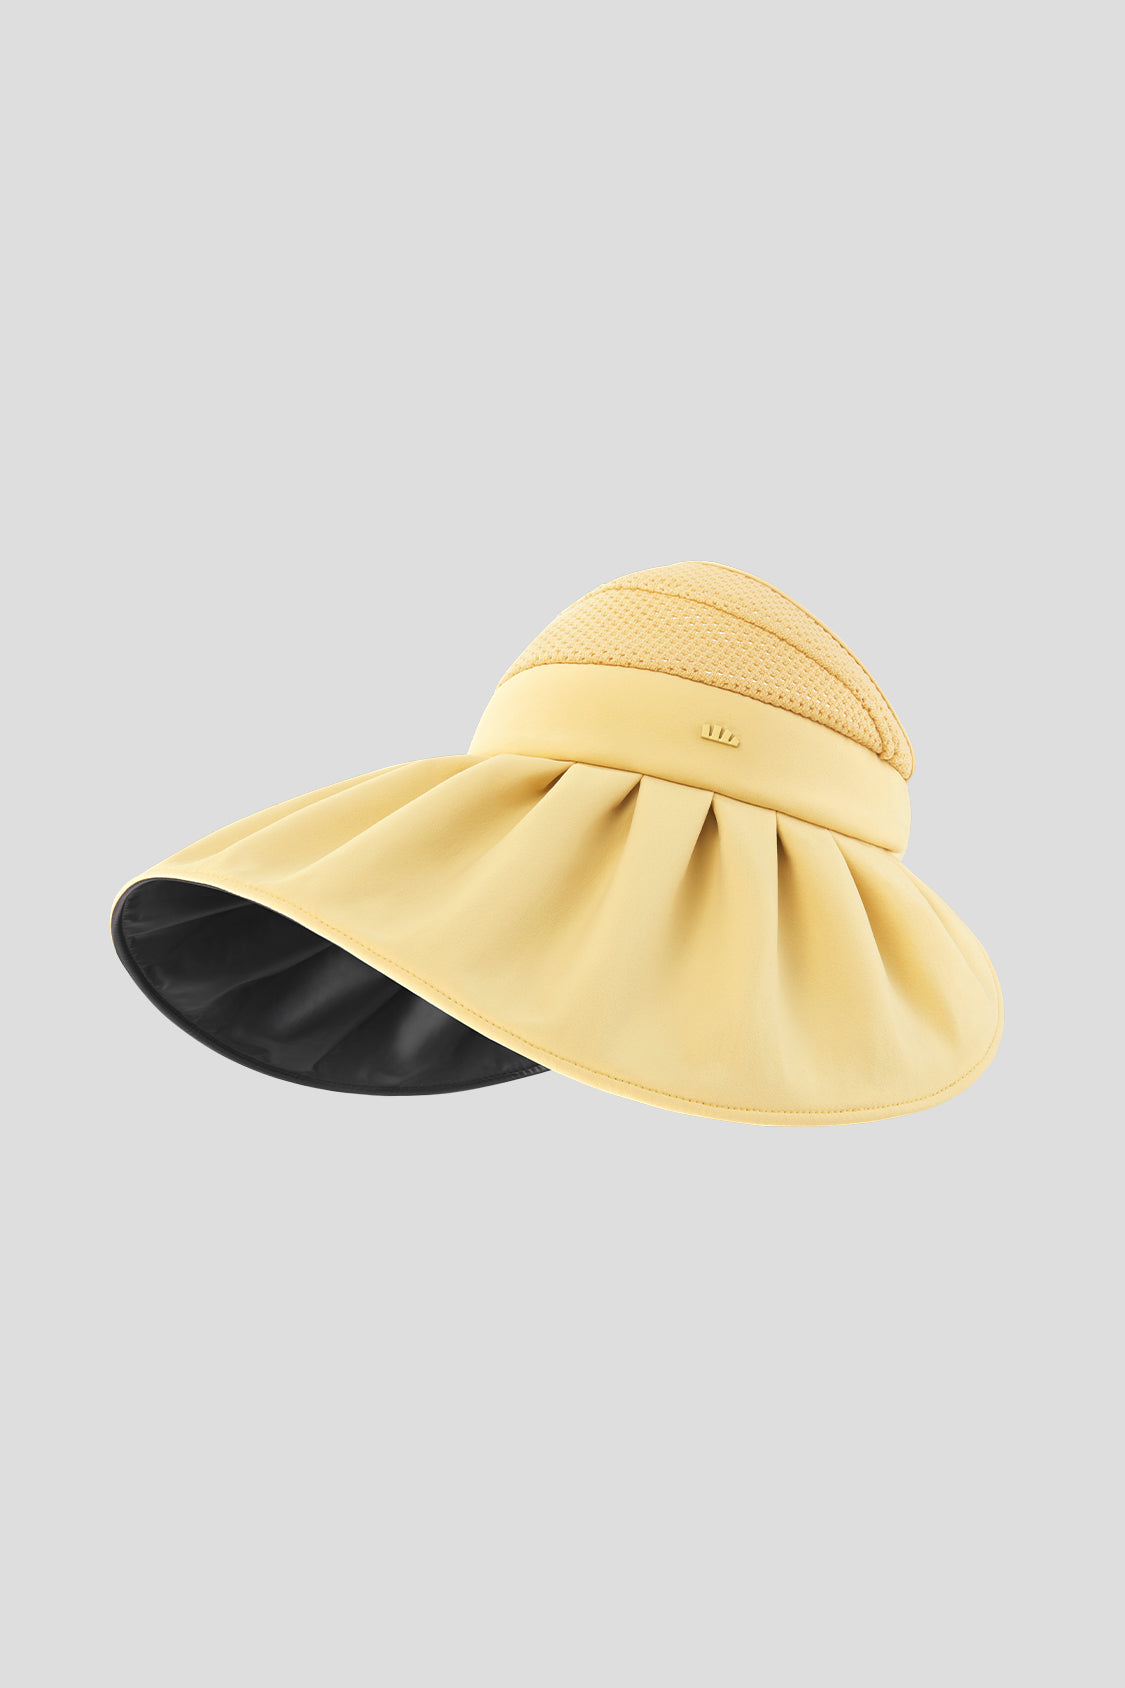 BENEUNDER Bucket Hats with Neck Cover Waterproof UPF 50+ UV